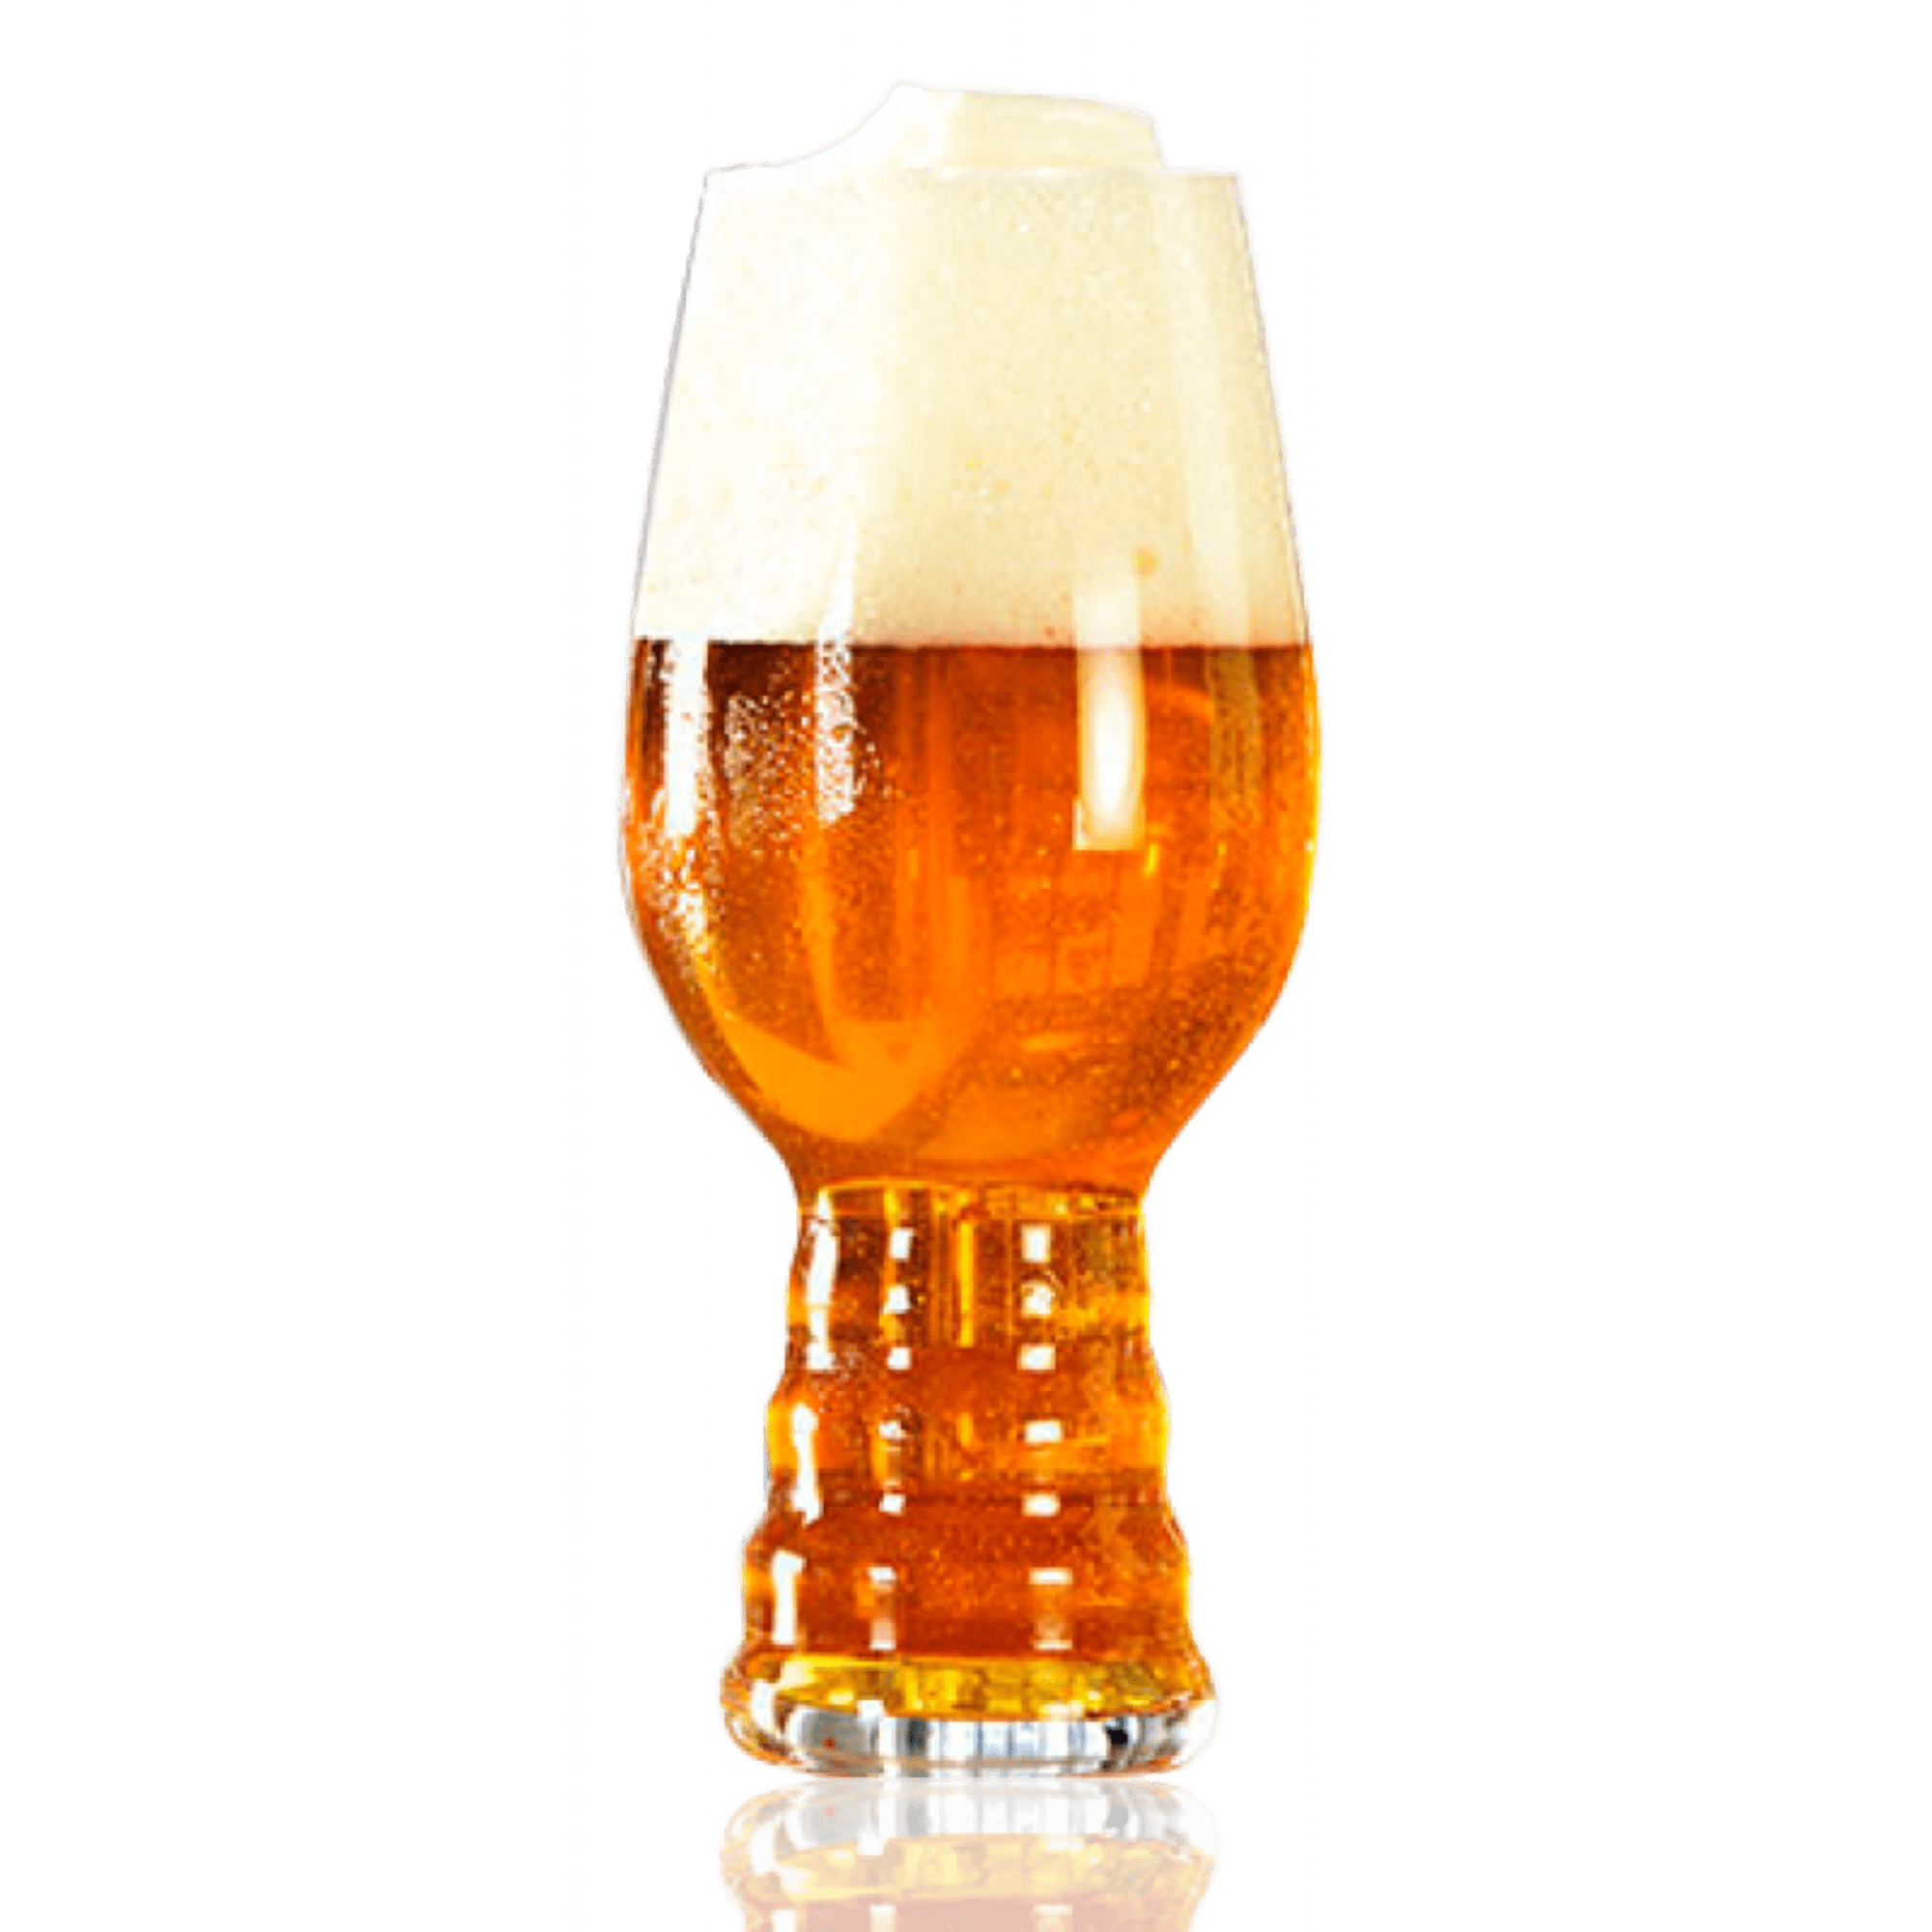 Spiegelau Craft Beer IPA Glass, Set of 4, European-Made Lead-Free Crystal,  Modern Beer Glasses, Dishwasher Safe, Professional Quality Beer Pint Glass  Gift Set, 19.1 oz 